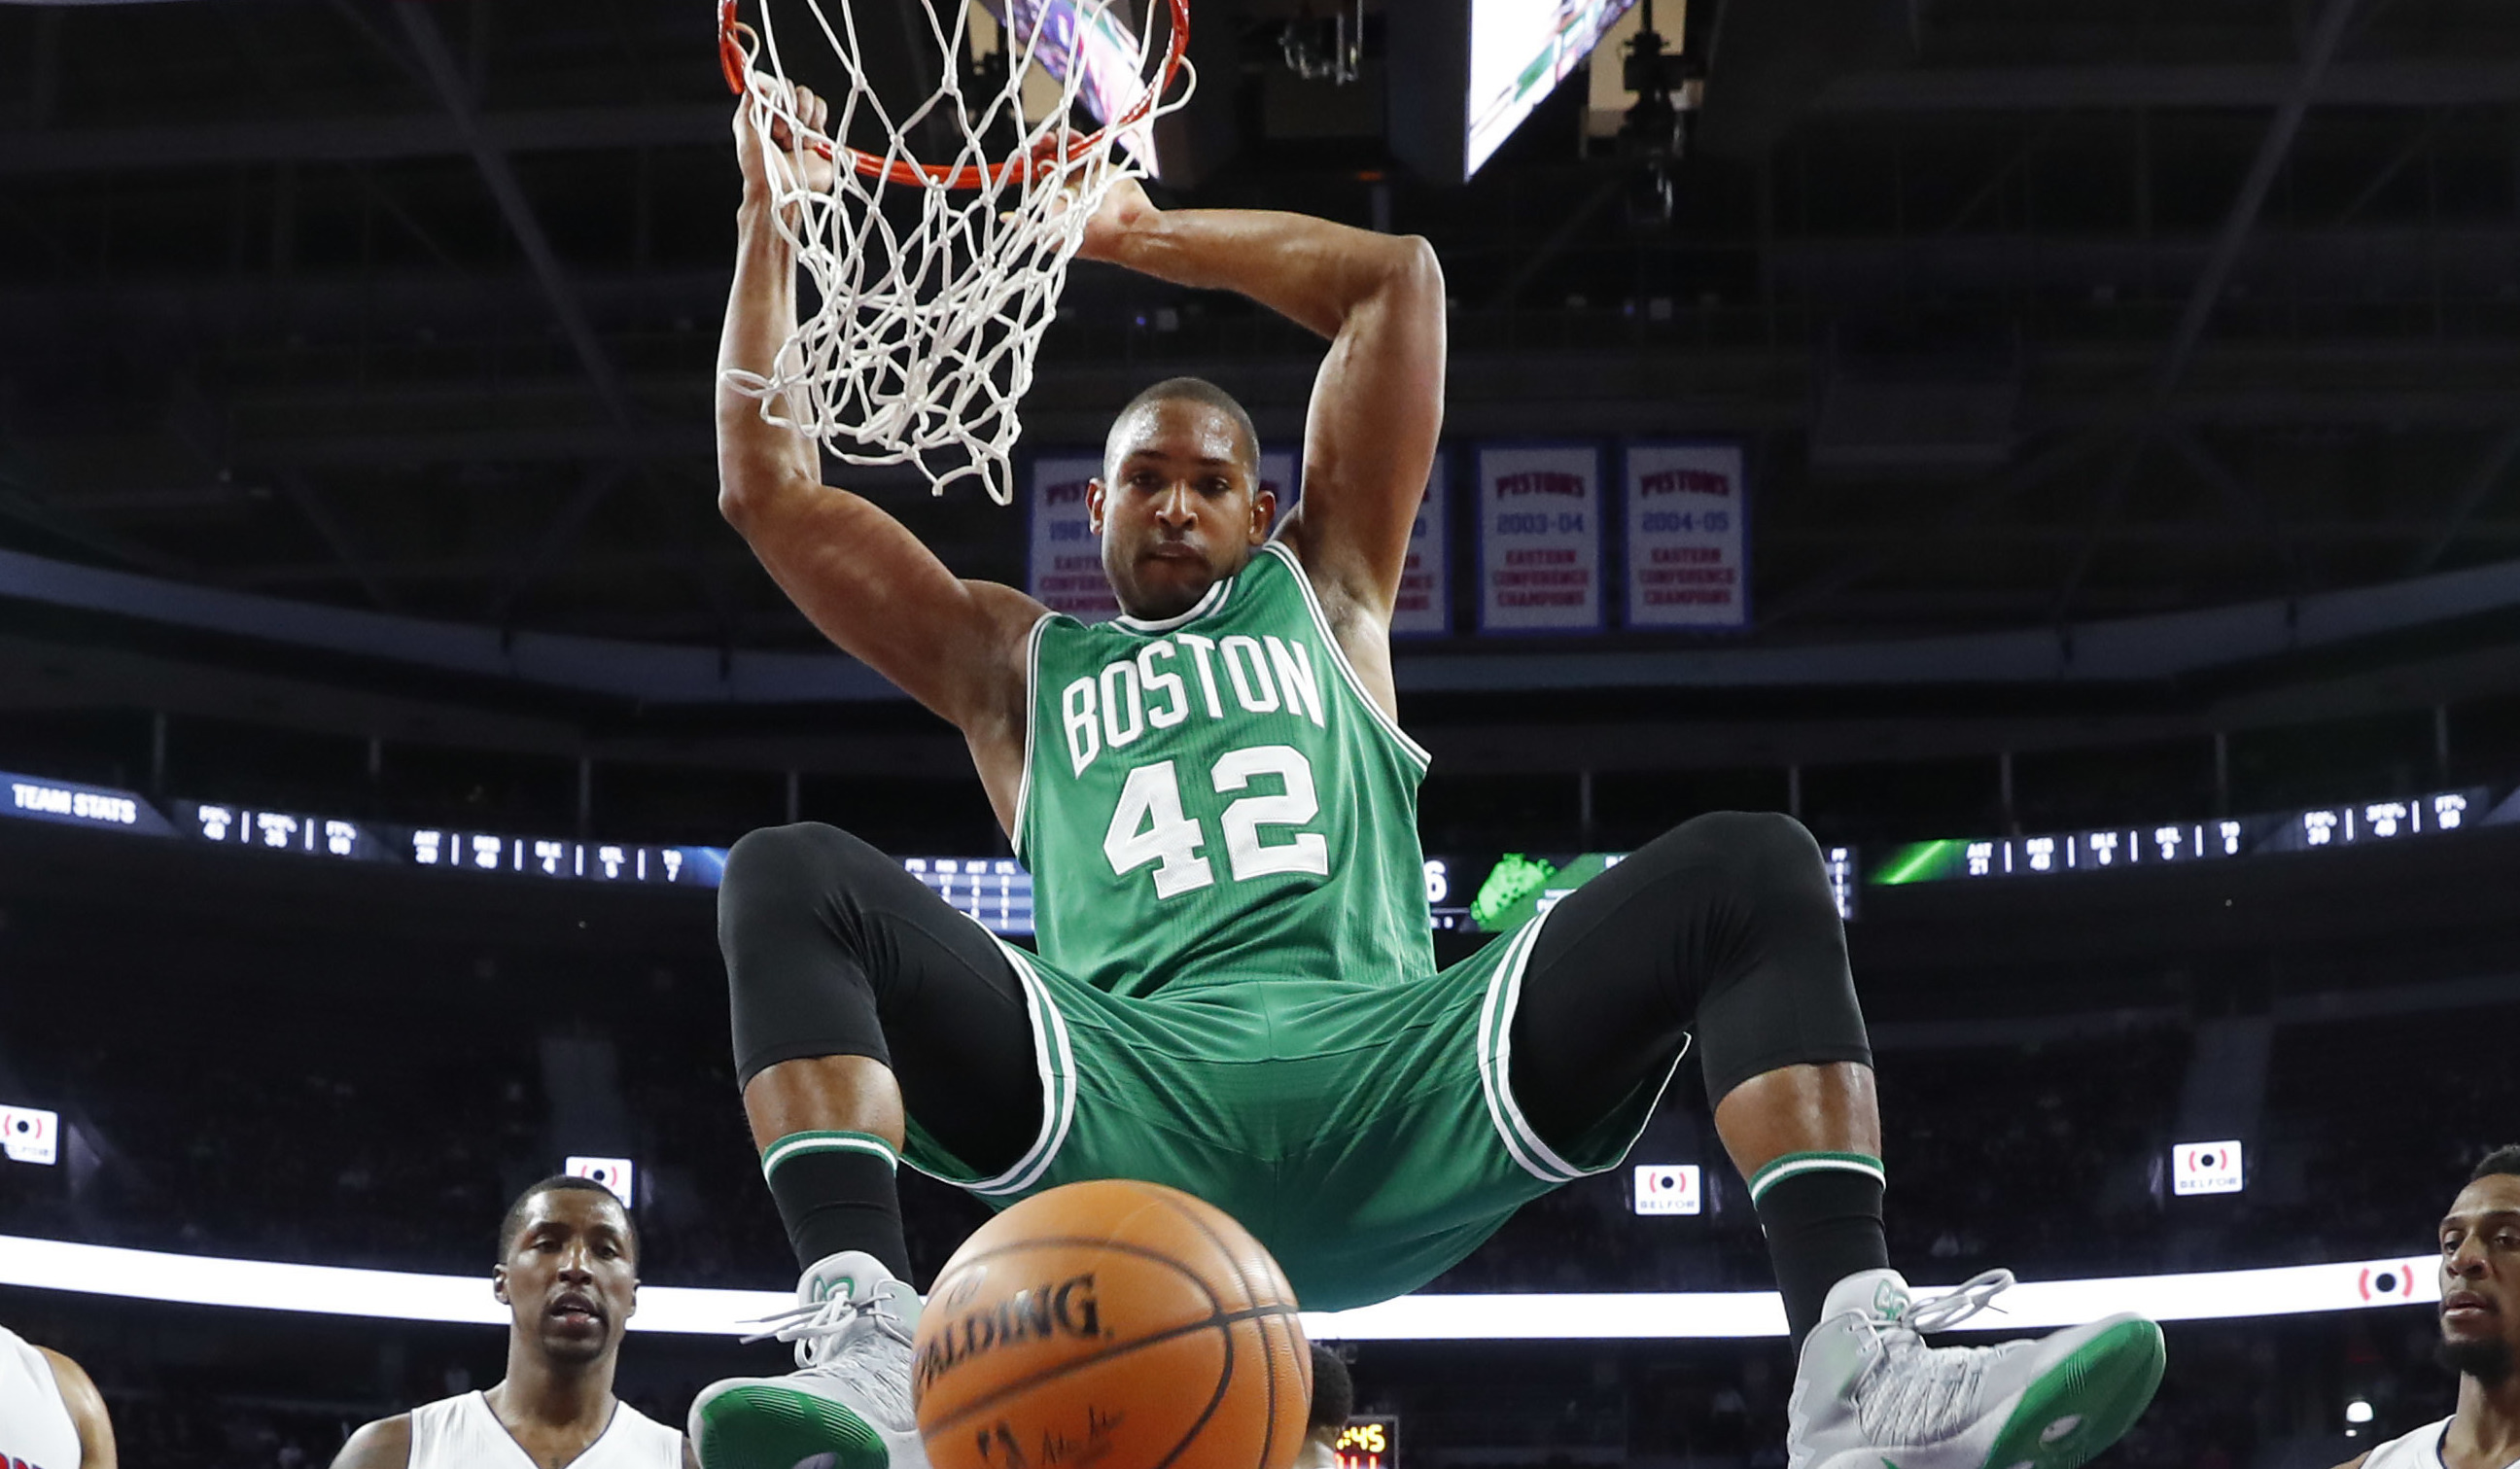 Dominicano Al Horford anota 23 puntos en victoria de Boston Celtics sobre Sixers